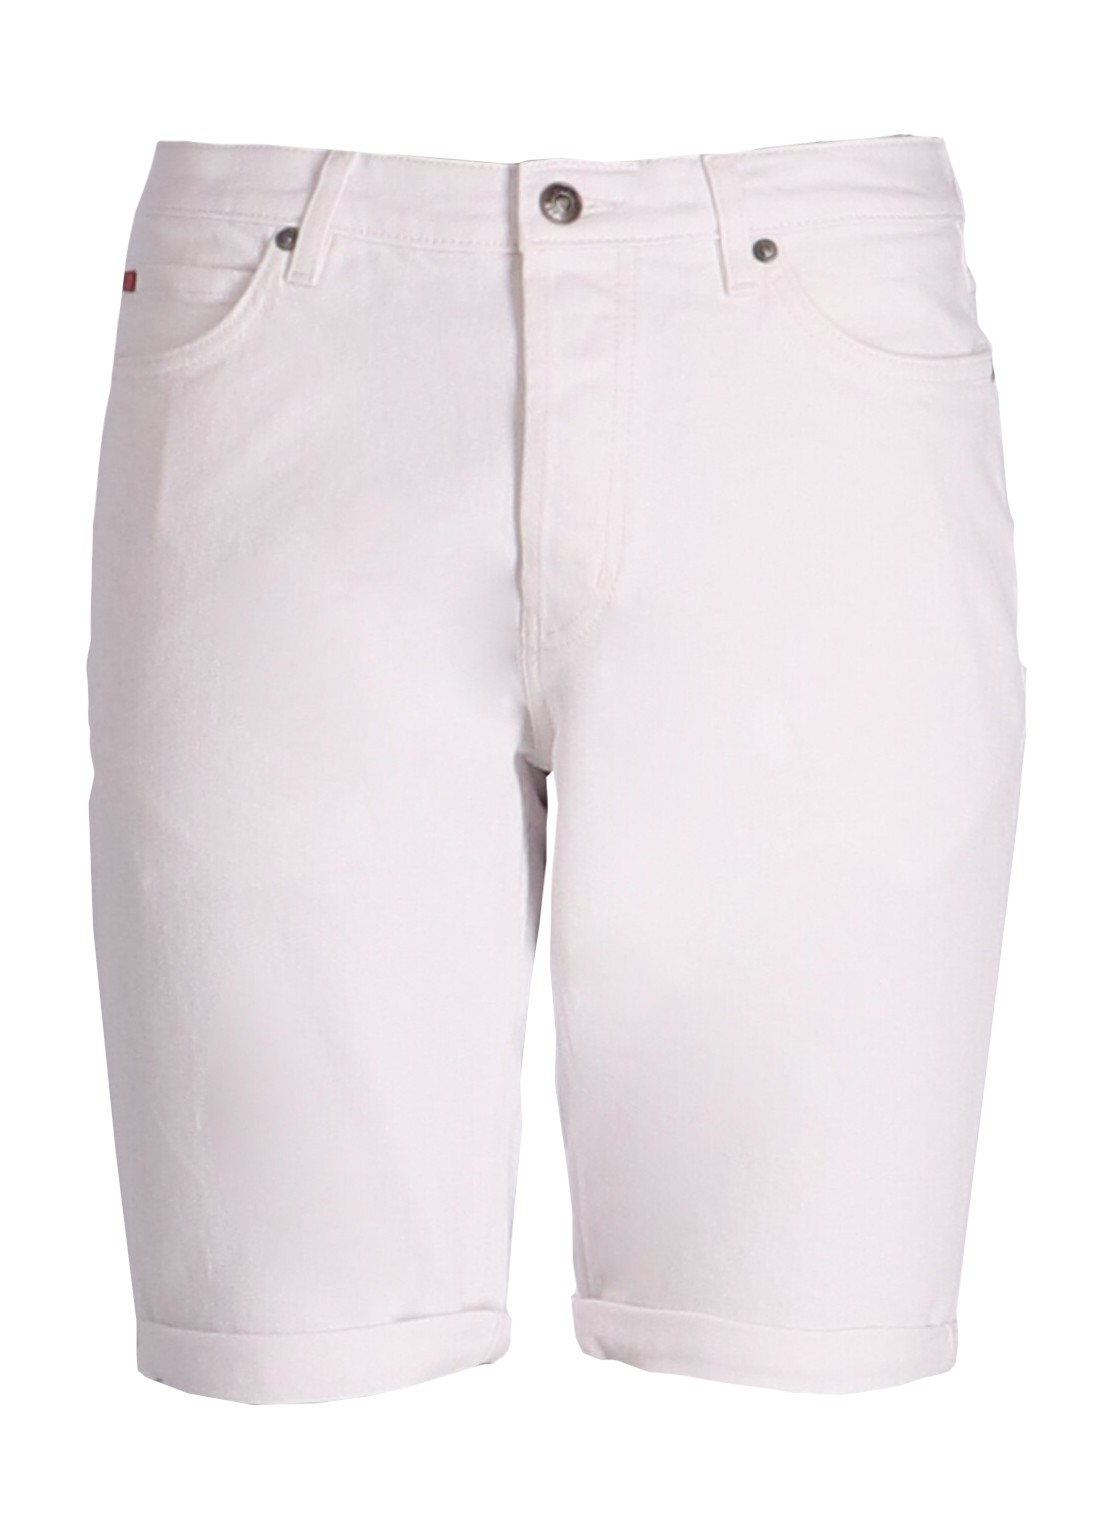 Pantalon corto hugo short pant manhugo 634/s - 50511306 100 talla 30
 